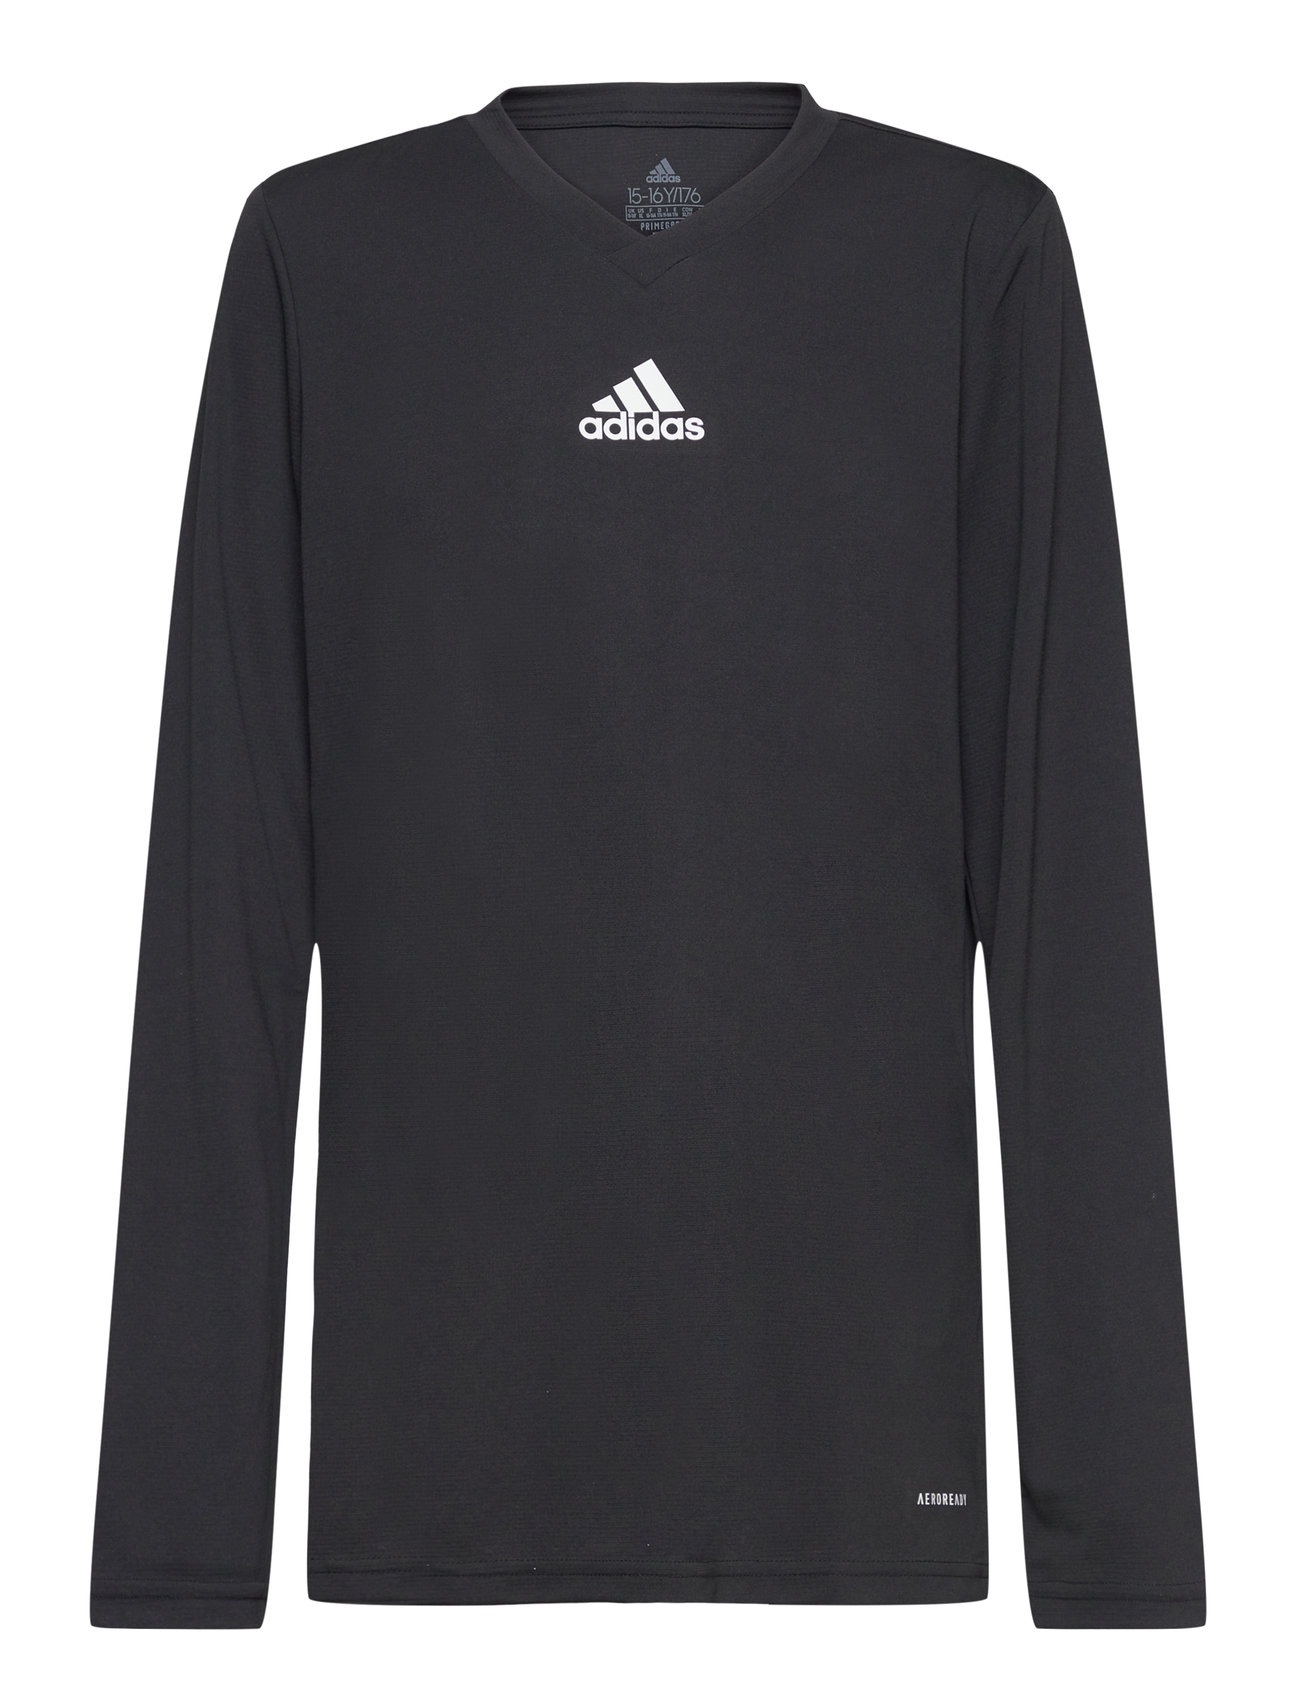 Team Base Youth Tee Sport T-shirts Long-sleeved T-shirts Black Adidas Performance